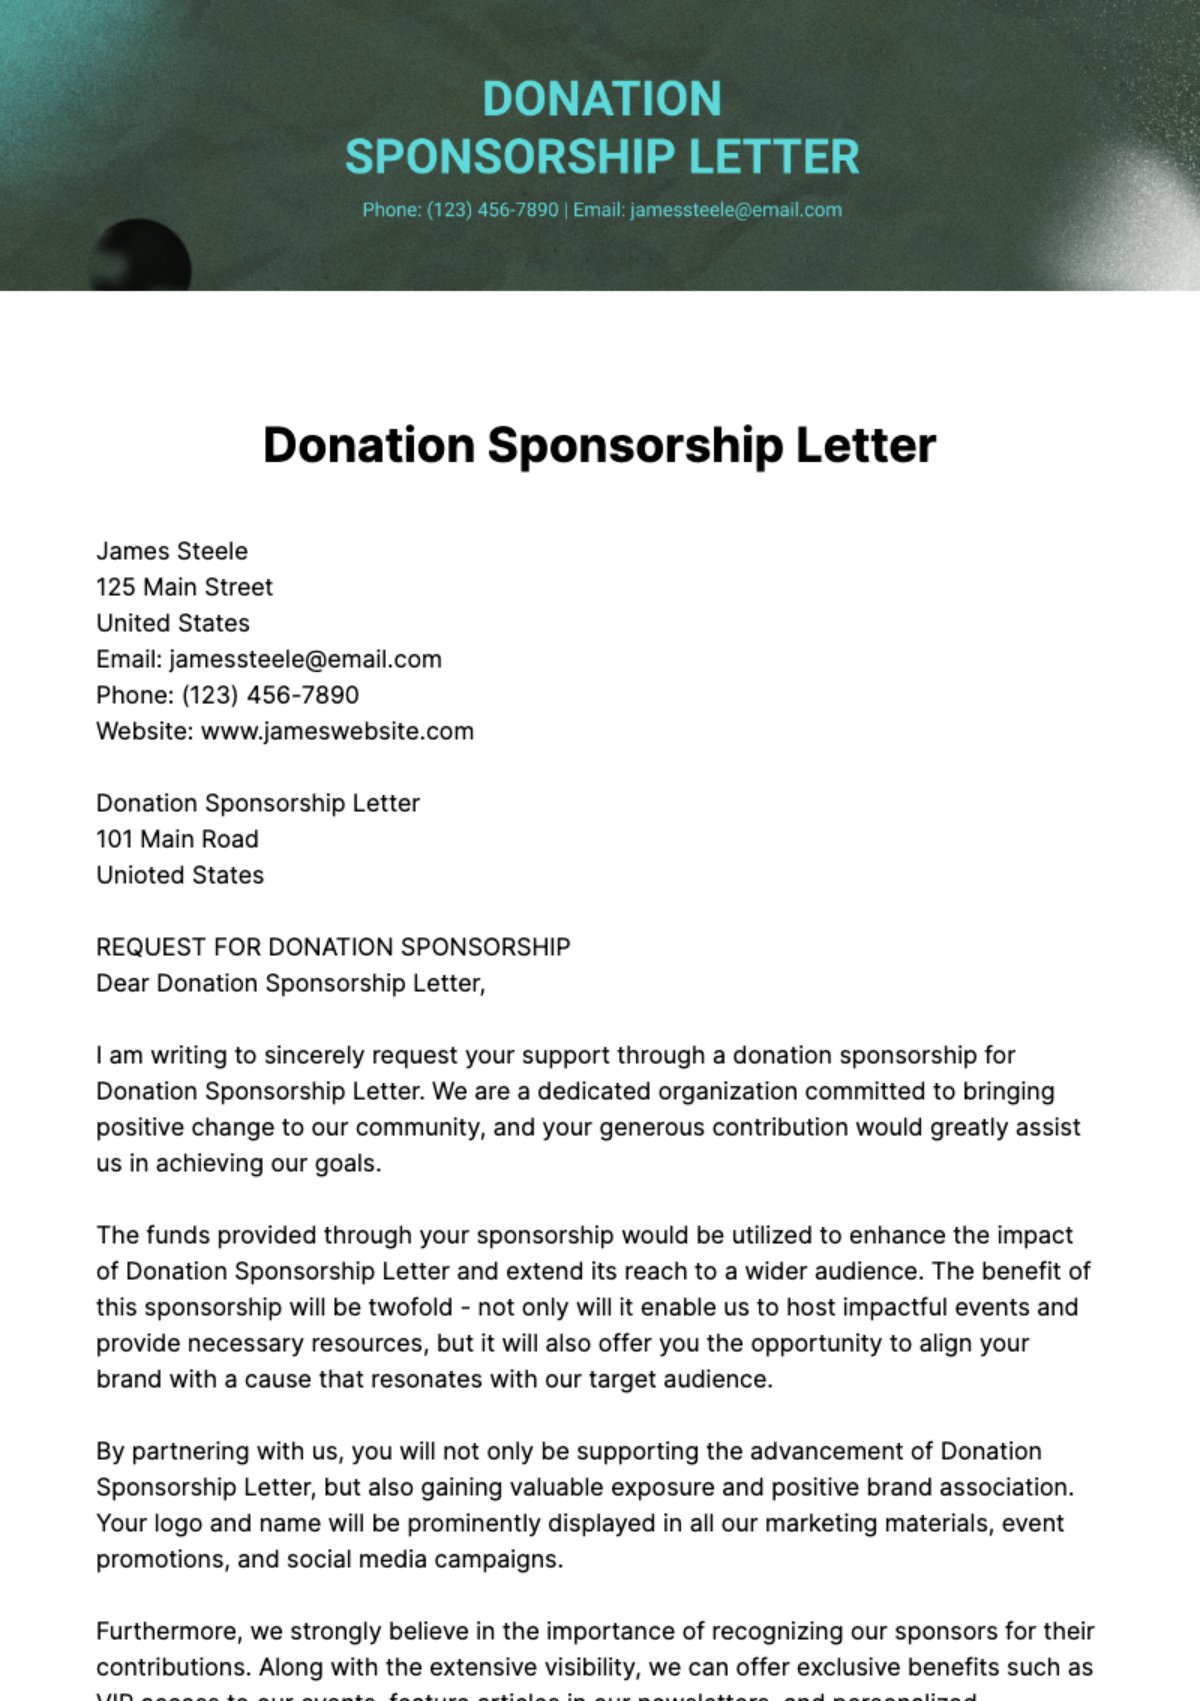 Free Donation Sponsorship Letter Template